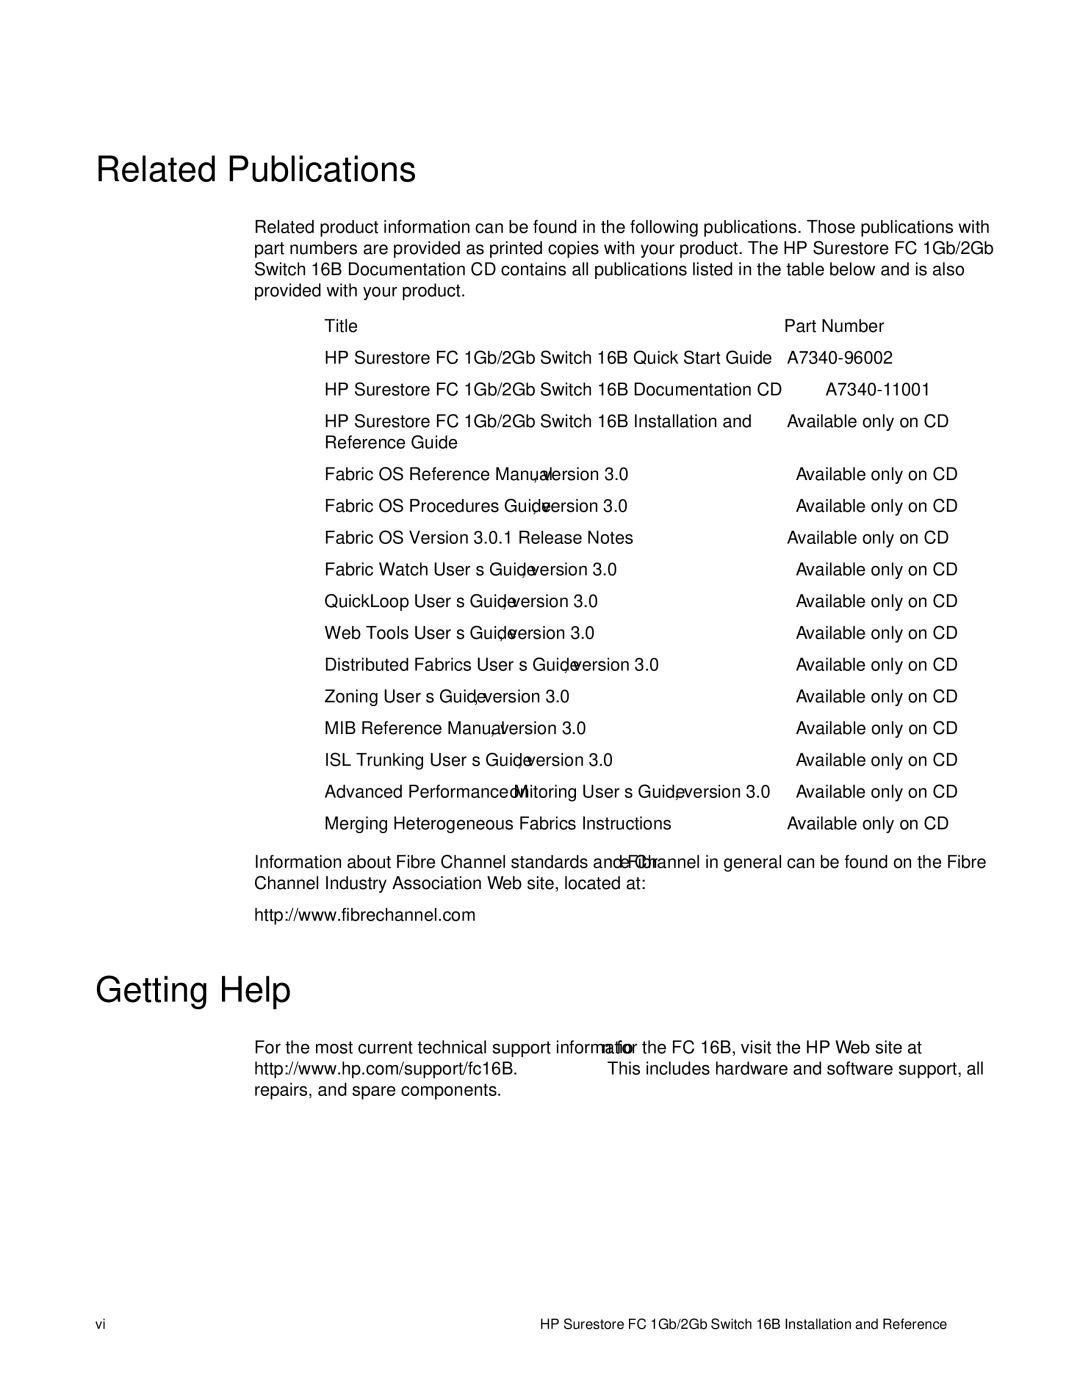 HP FC 1GB/2GB 16B manual Related Publications, Getting Help 